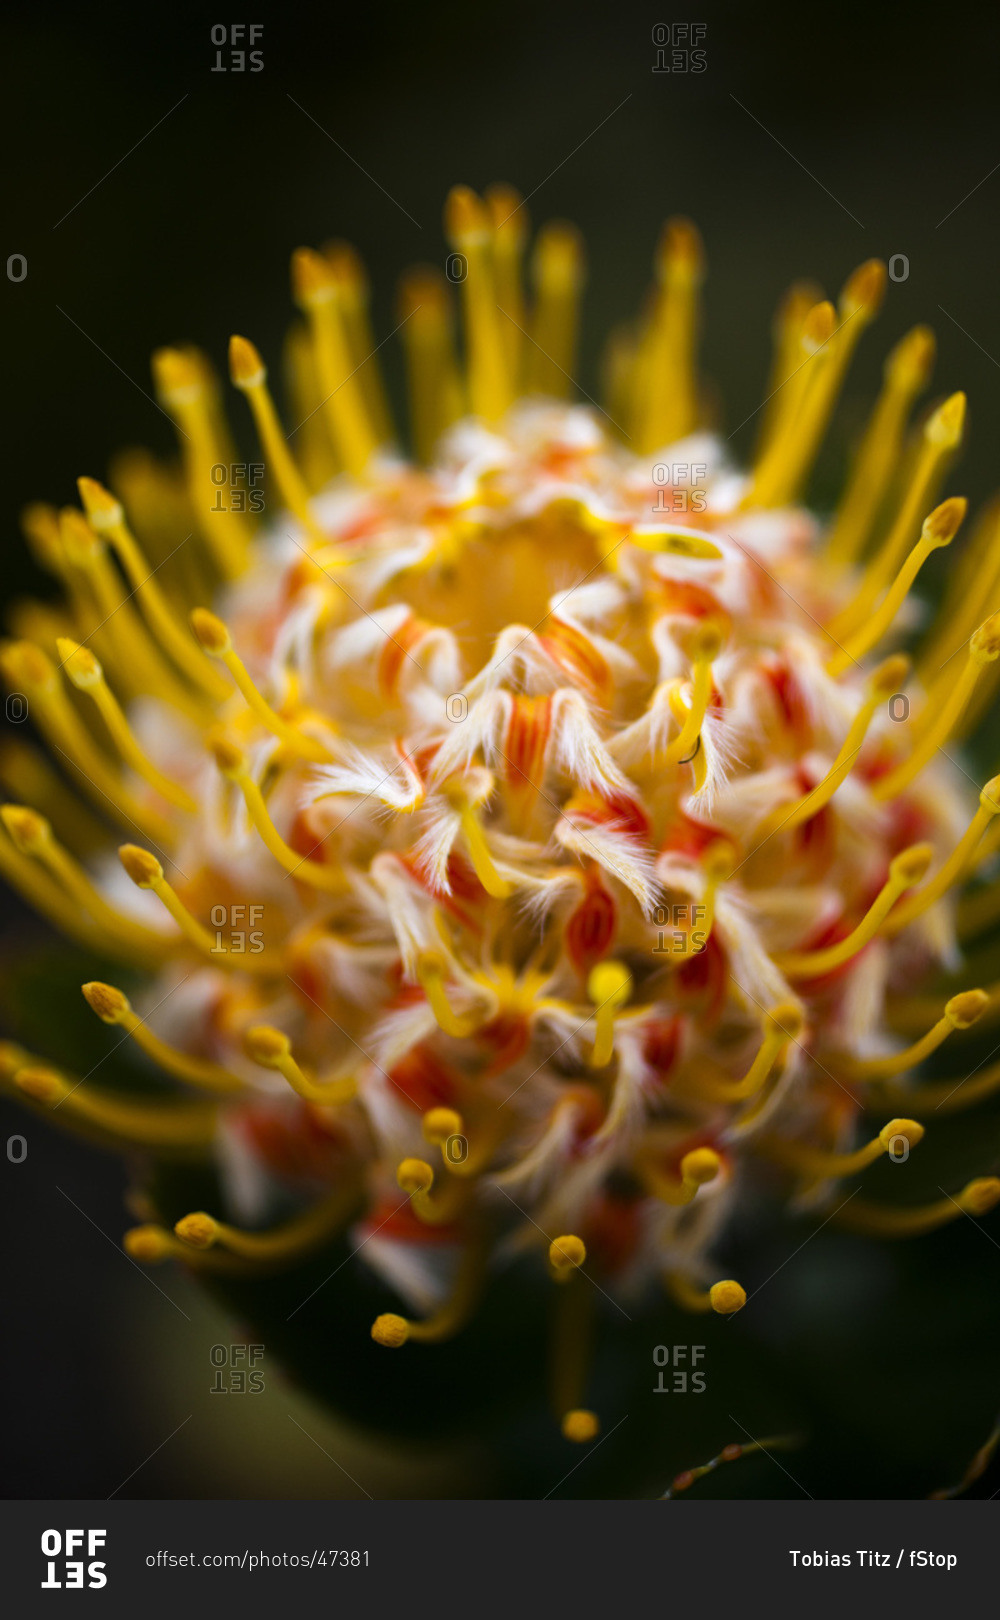 A Pincushion Protea 'Veld Fire' (Leucospermum) flower, close-up